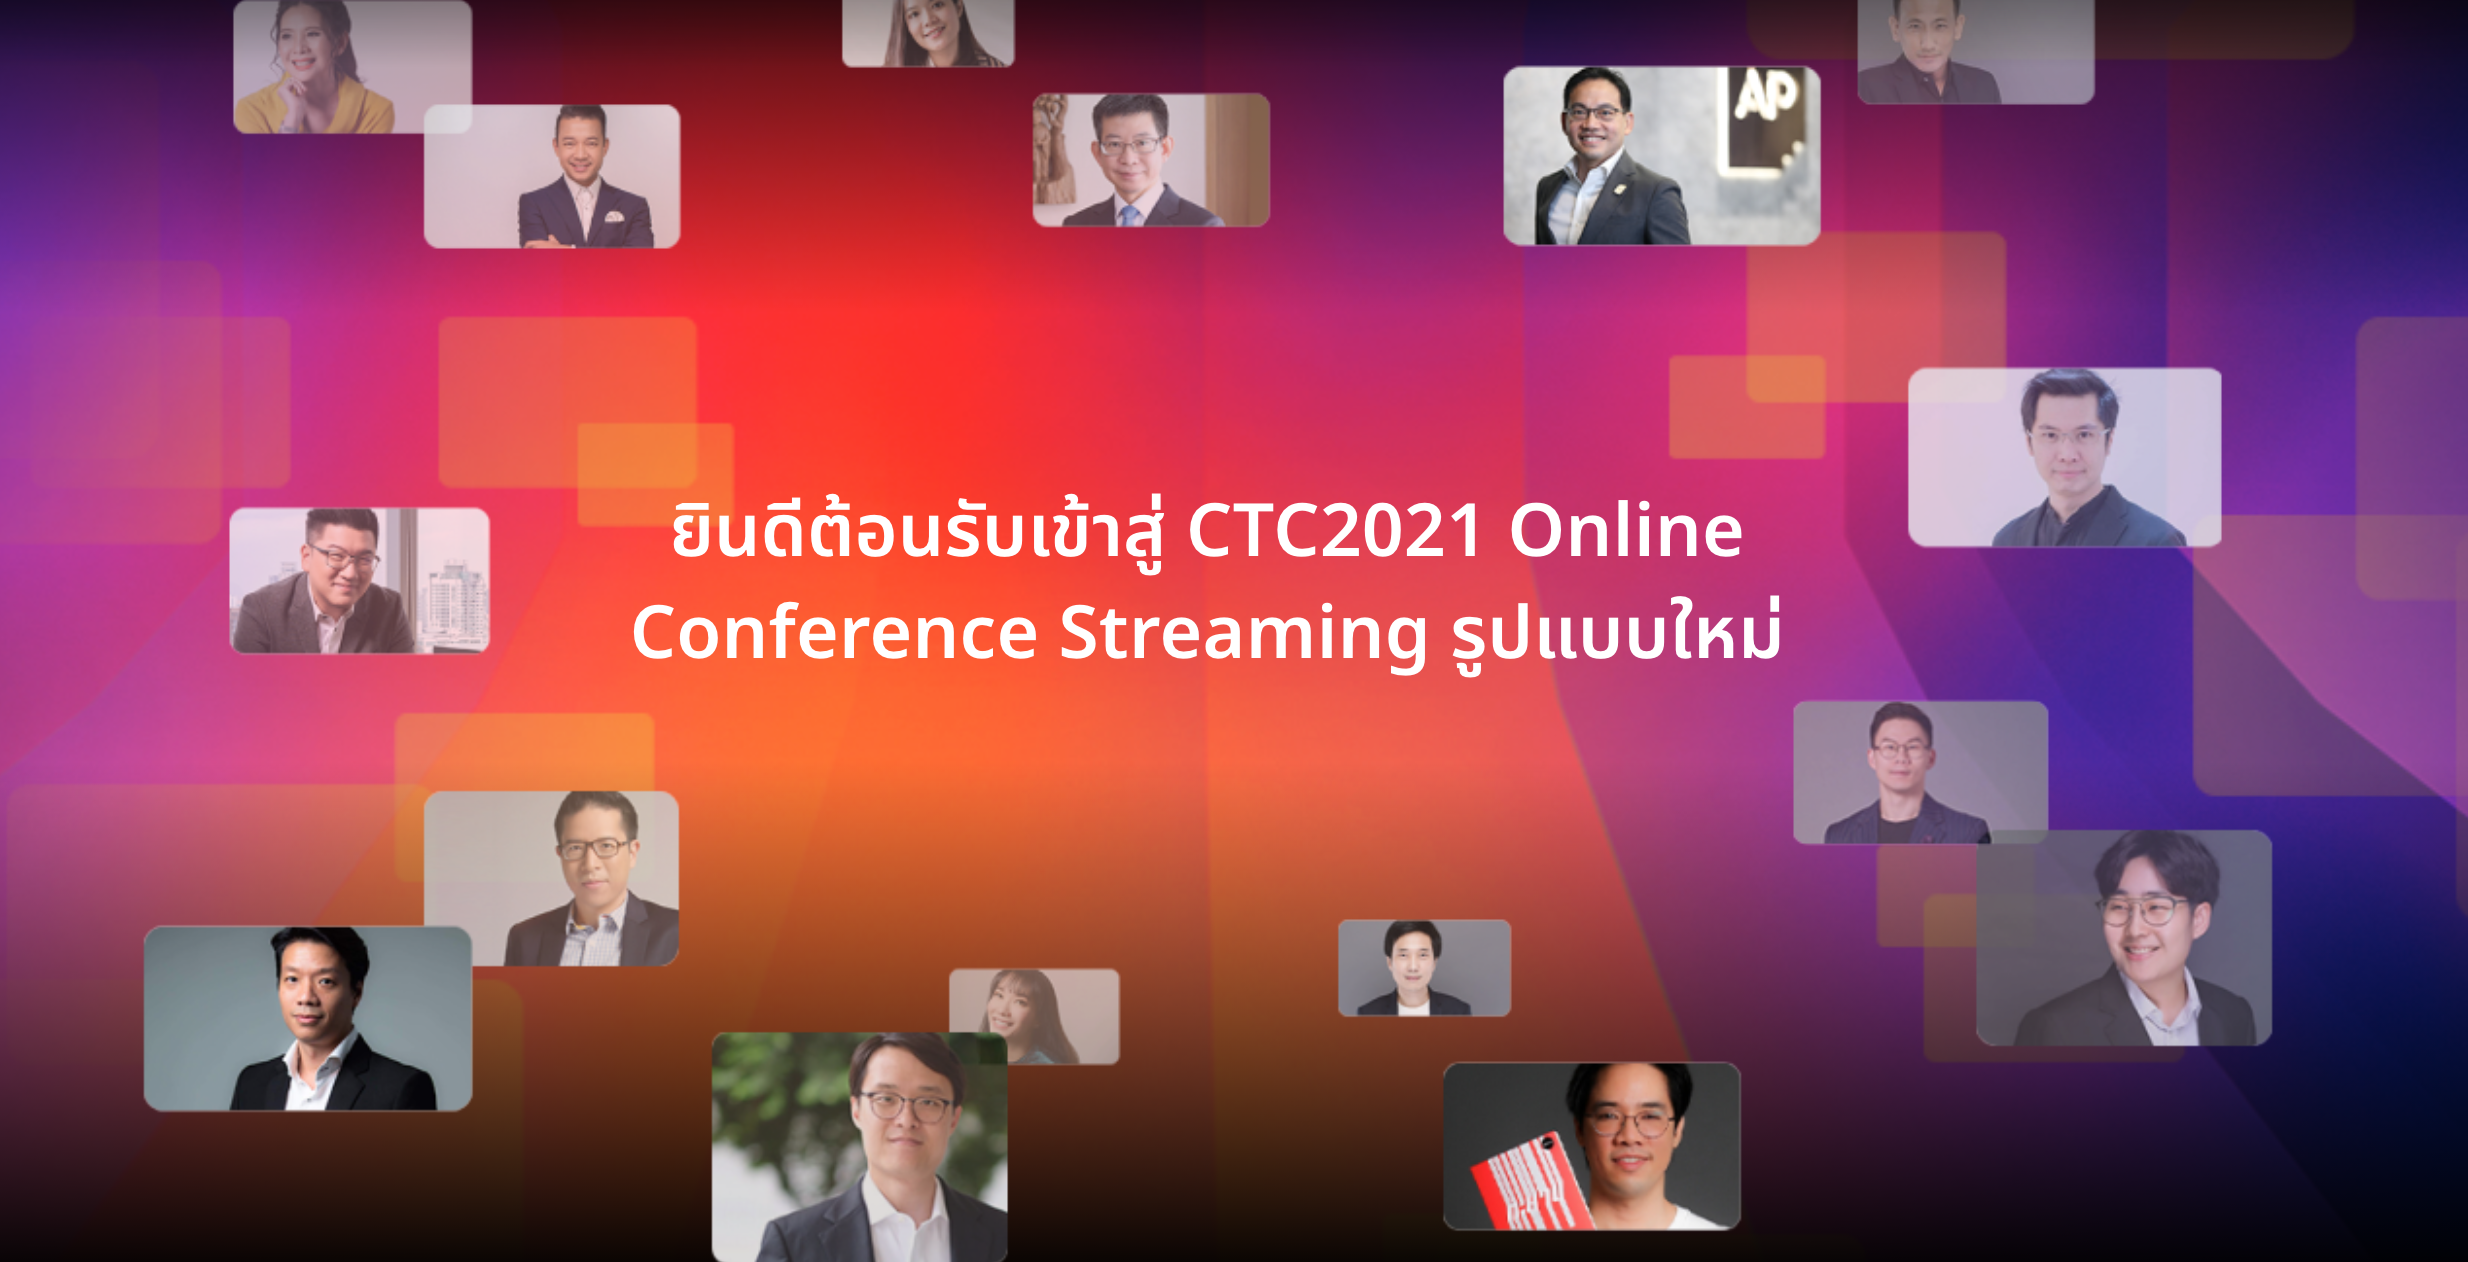 5 Marketing Session น่าฟังประจำงาน CTC Online 2021